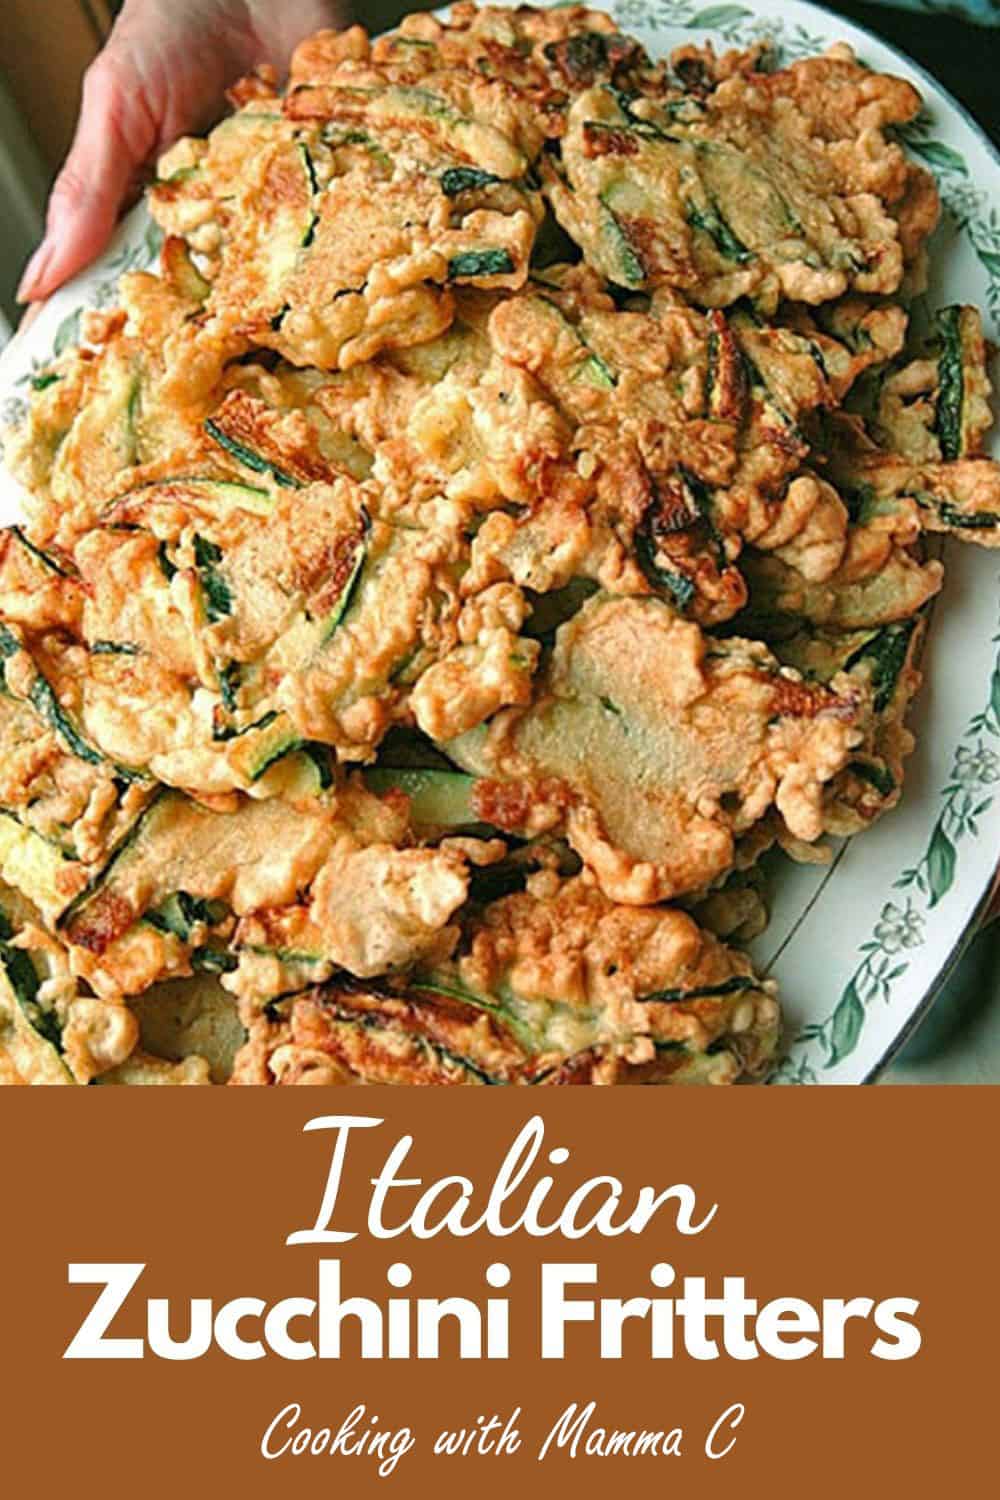 Italian Zucchini Fritters Recipe - Cooking with Mamma C